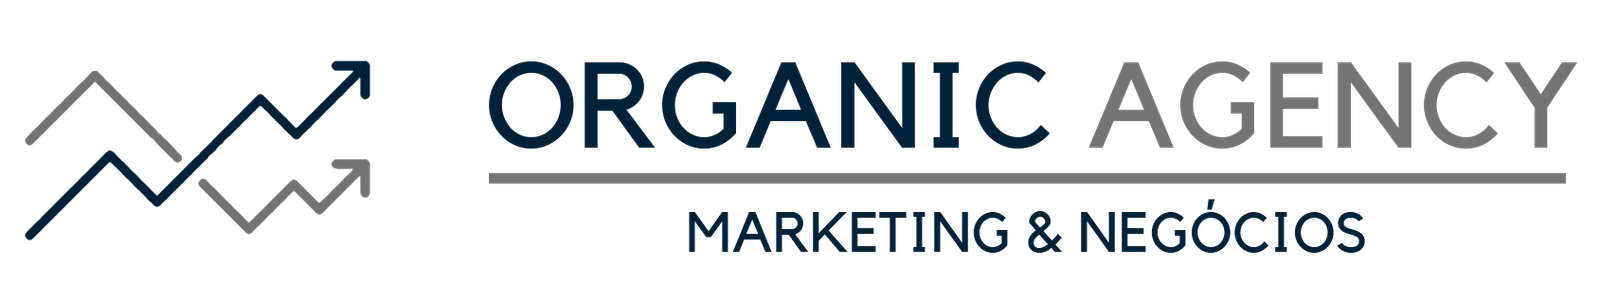 Organic Agency